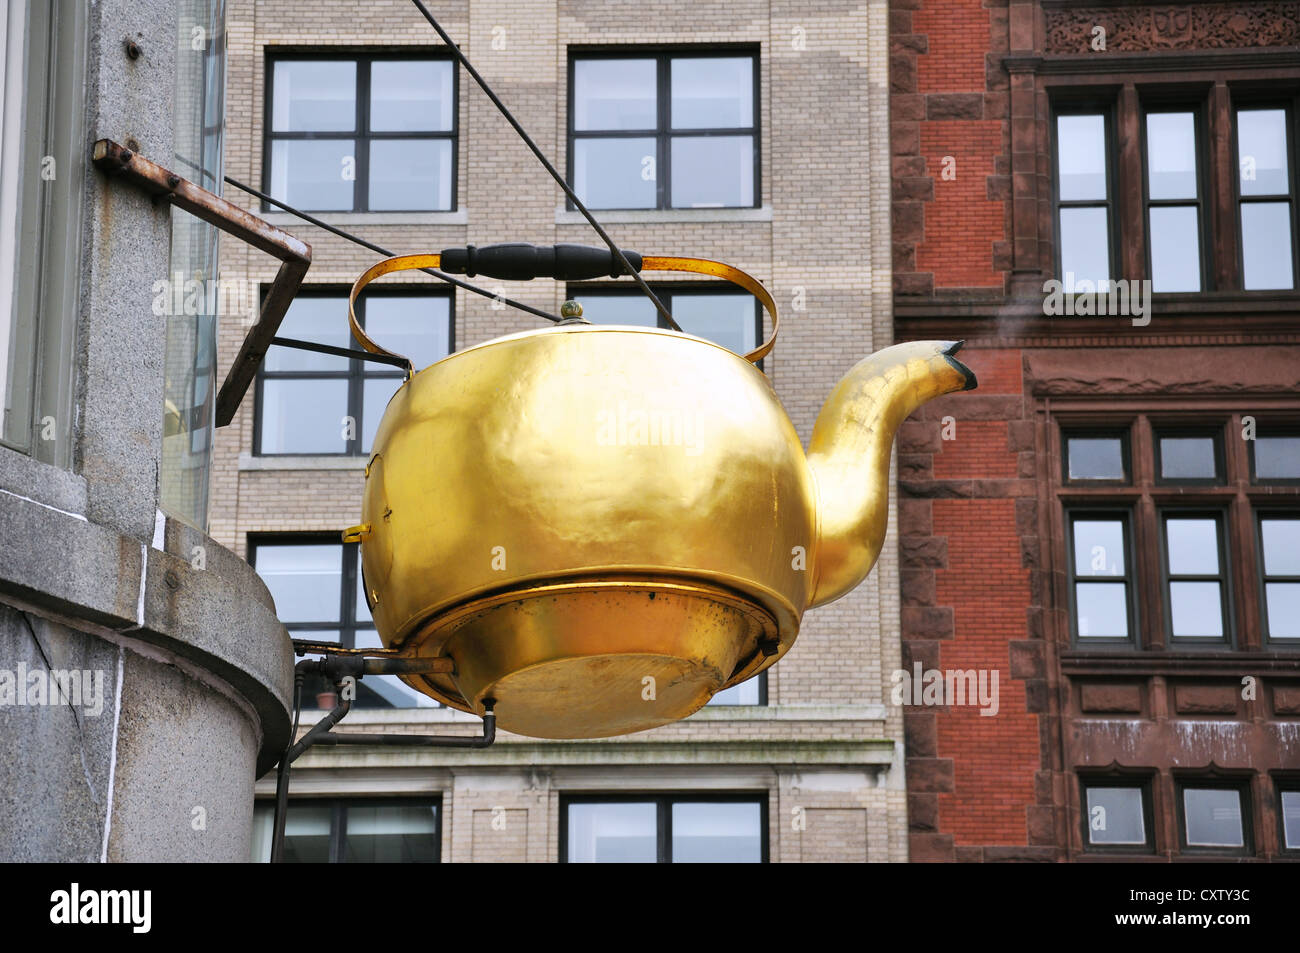 https://c8.alamy.com/comp/CXTY3C/giant-steaming-tea-kettle-boston-usa-CXTY3C.jpg